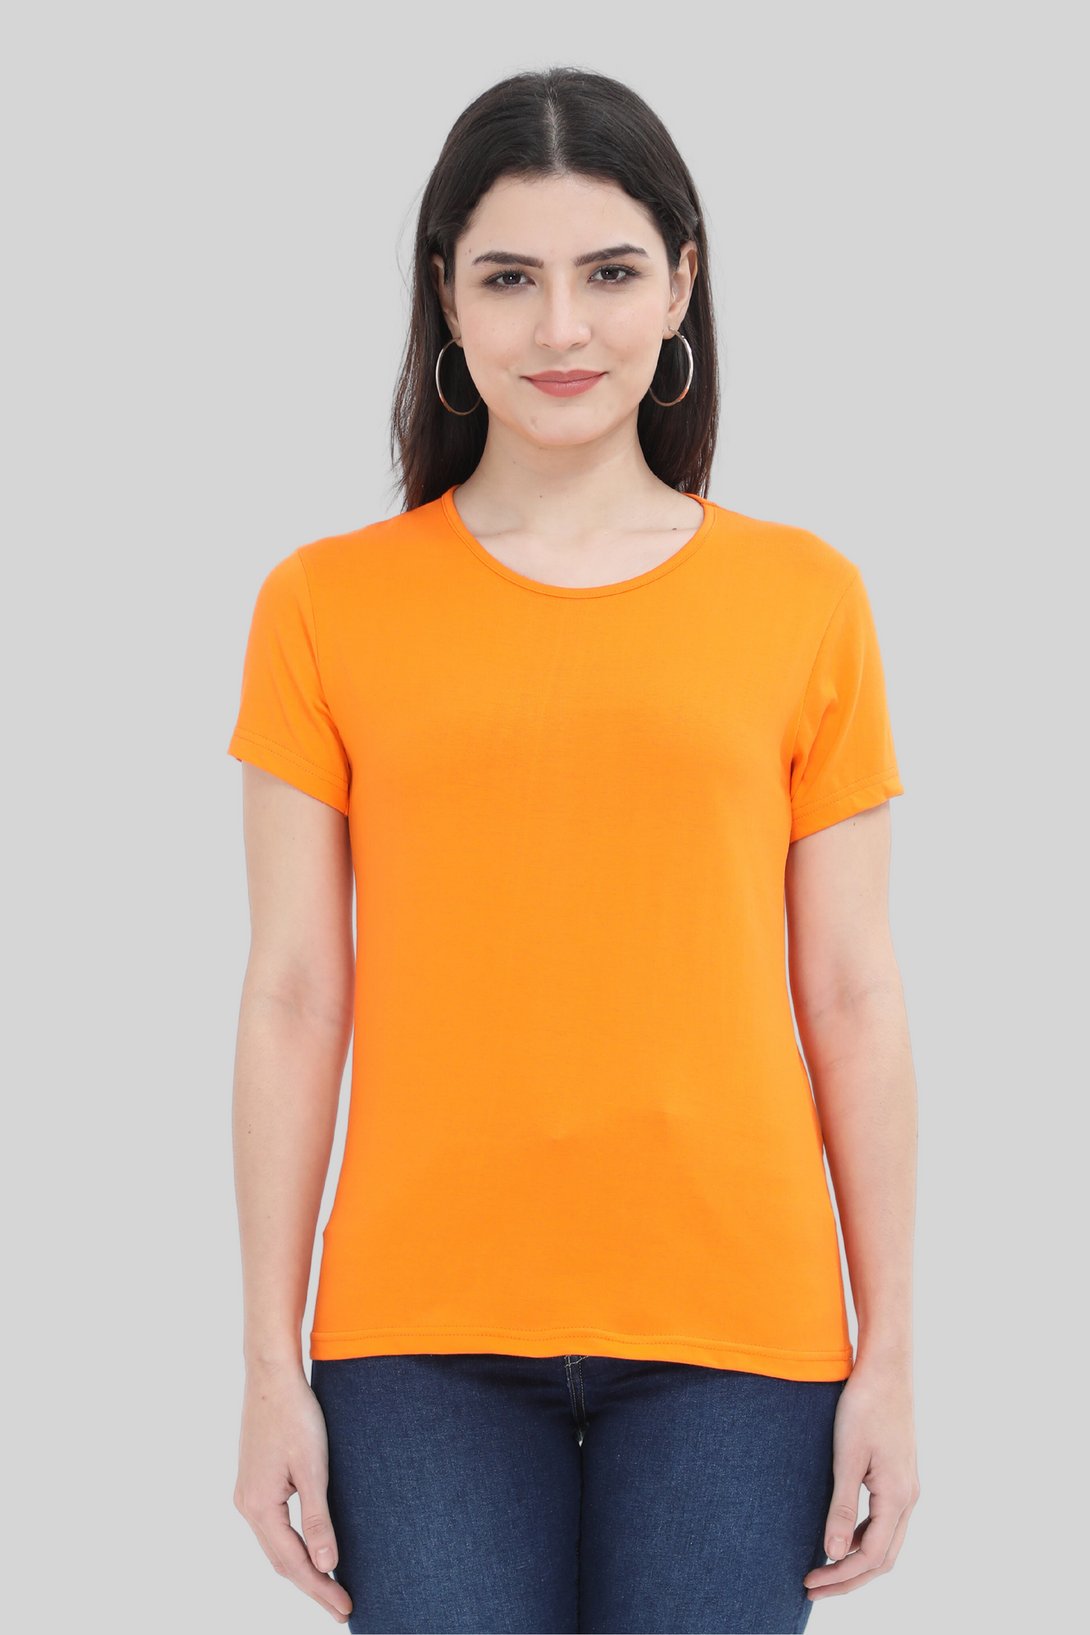 Orange Scoop Neck T-Shirt For Women - WowWaves